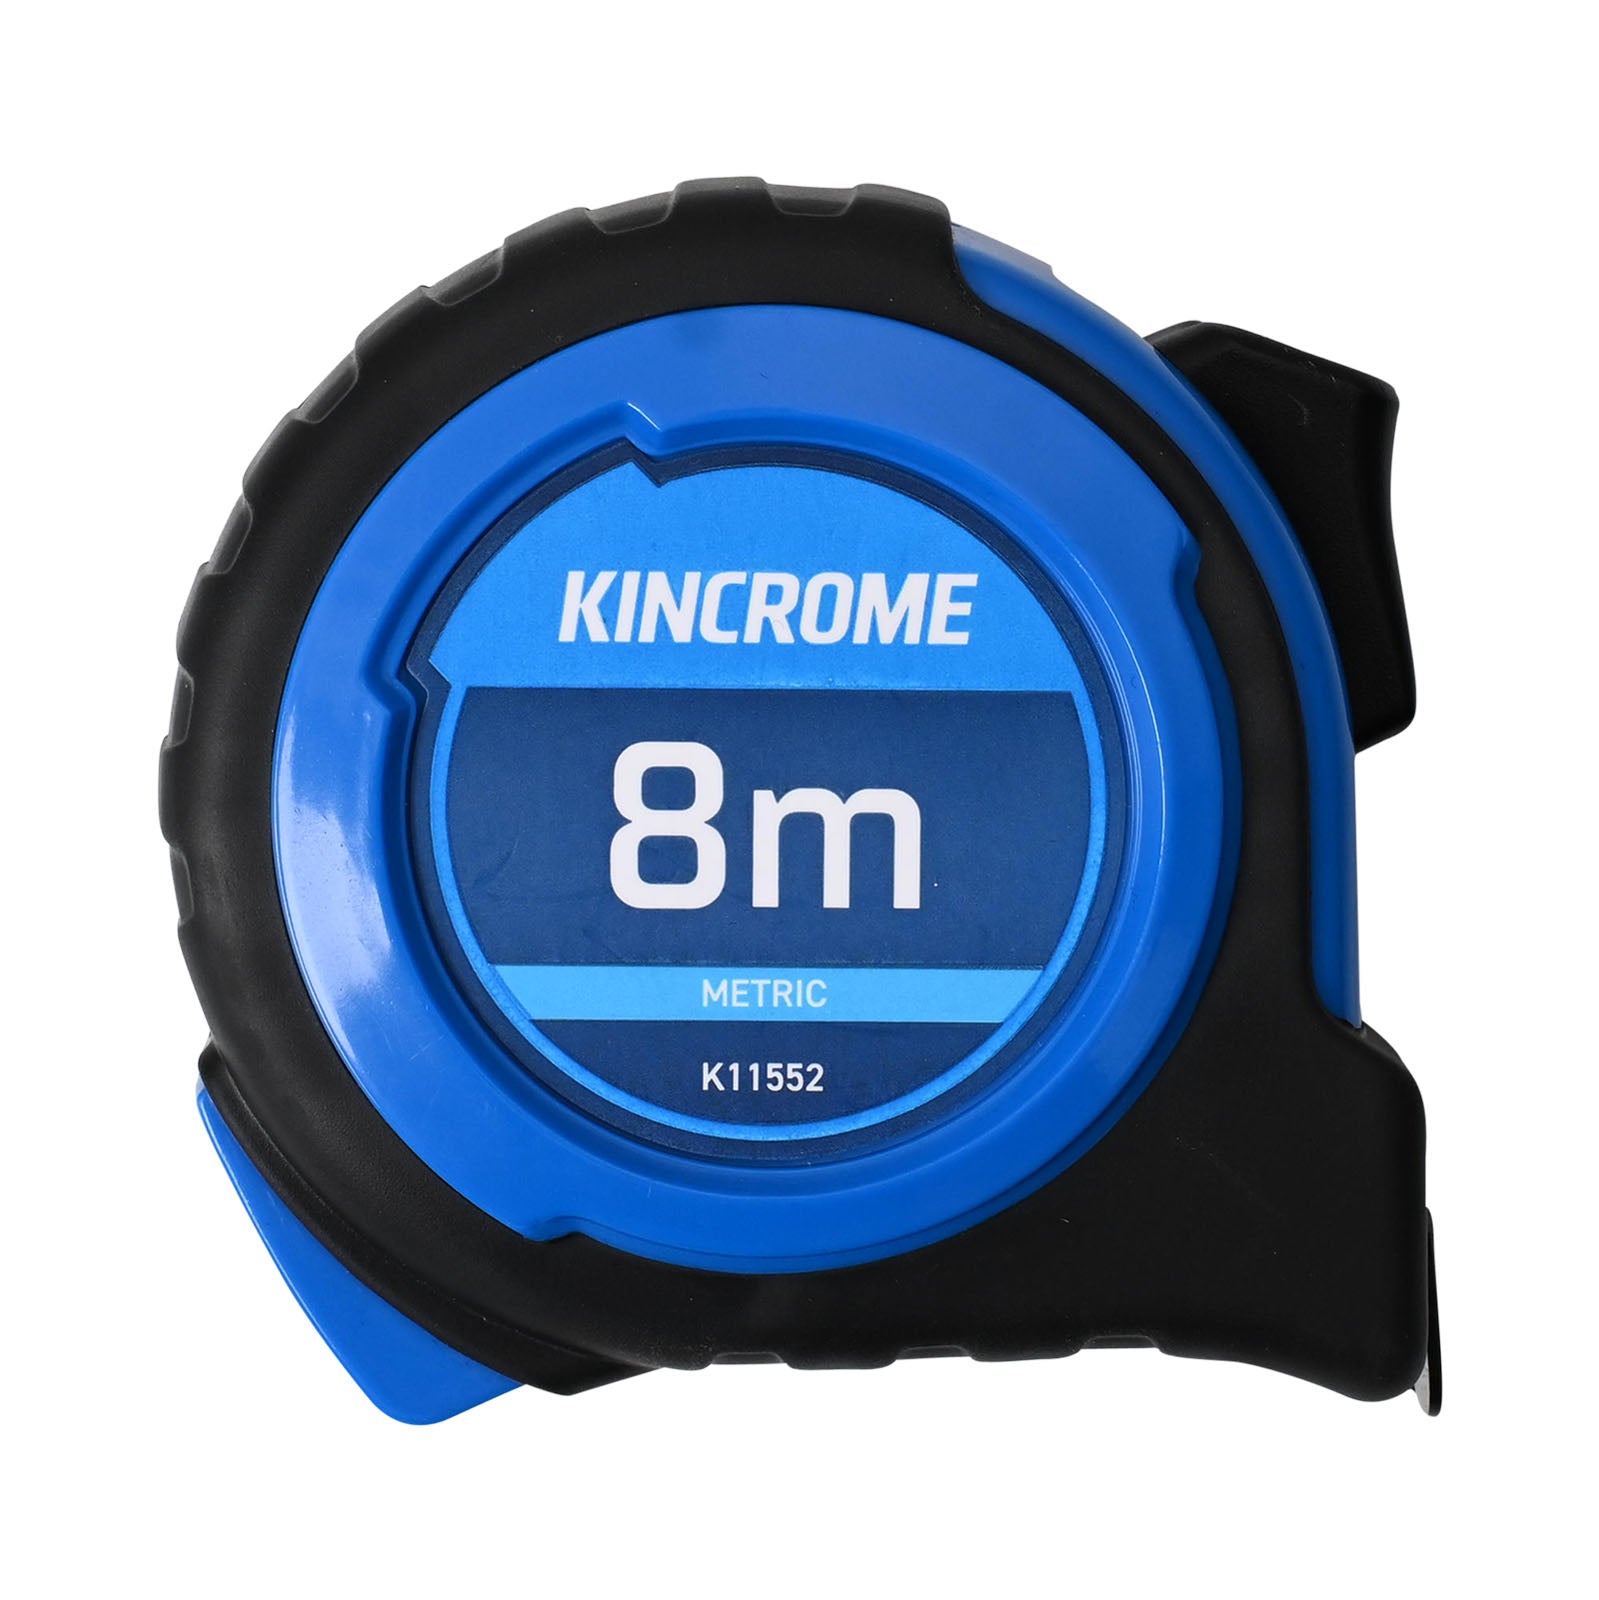 8M Tape Measure, Metric  - K11552 by Kincrome